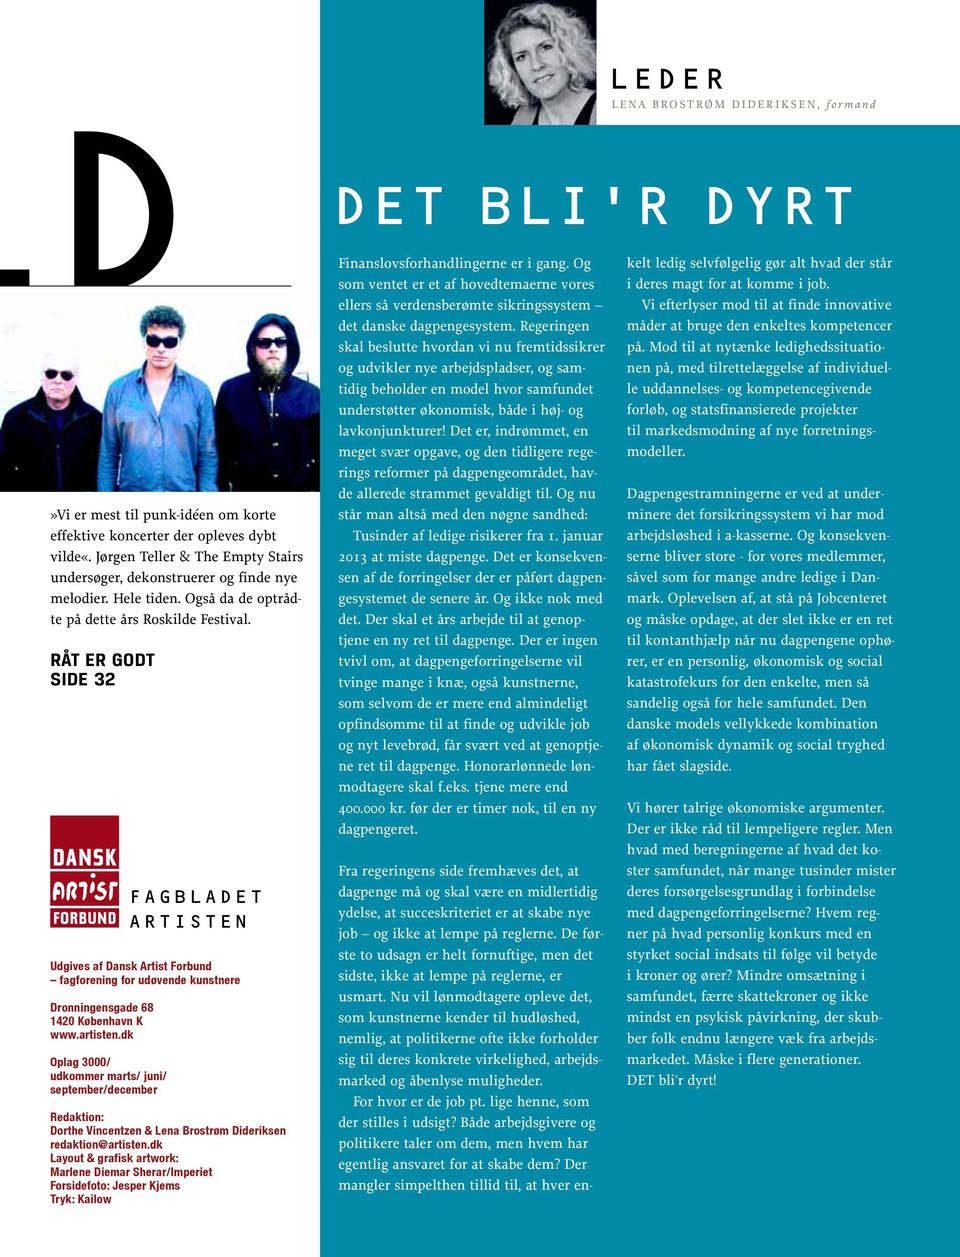 artisten.dk Oplag 3000/ udkommer marts/ juni/ september/december Redaktion: Dorthe Vincentzen & Lena Brostrøm Dideriksen redaktion@artisten.